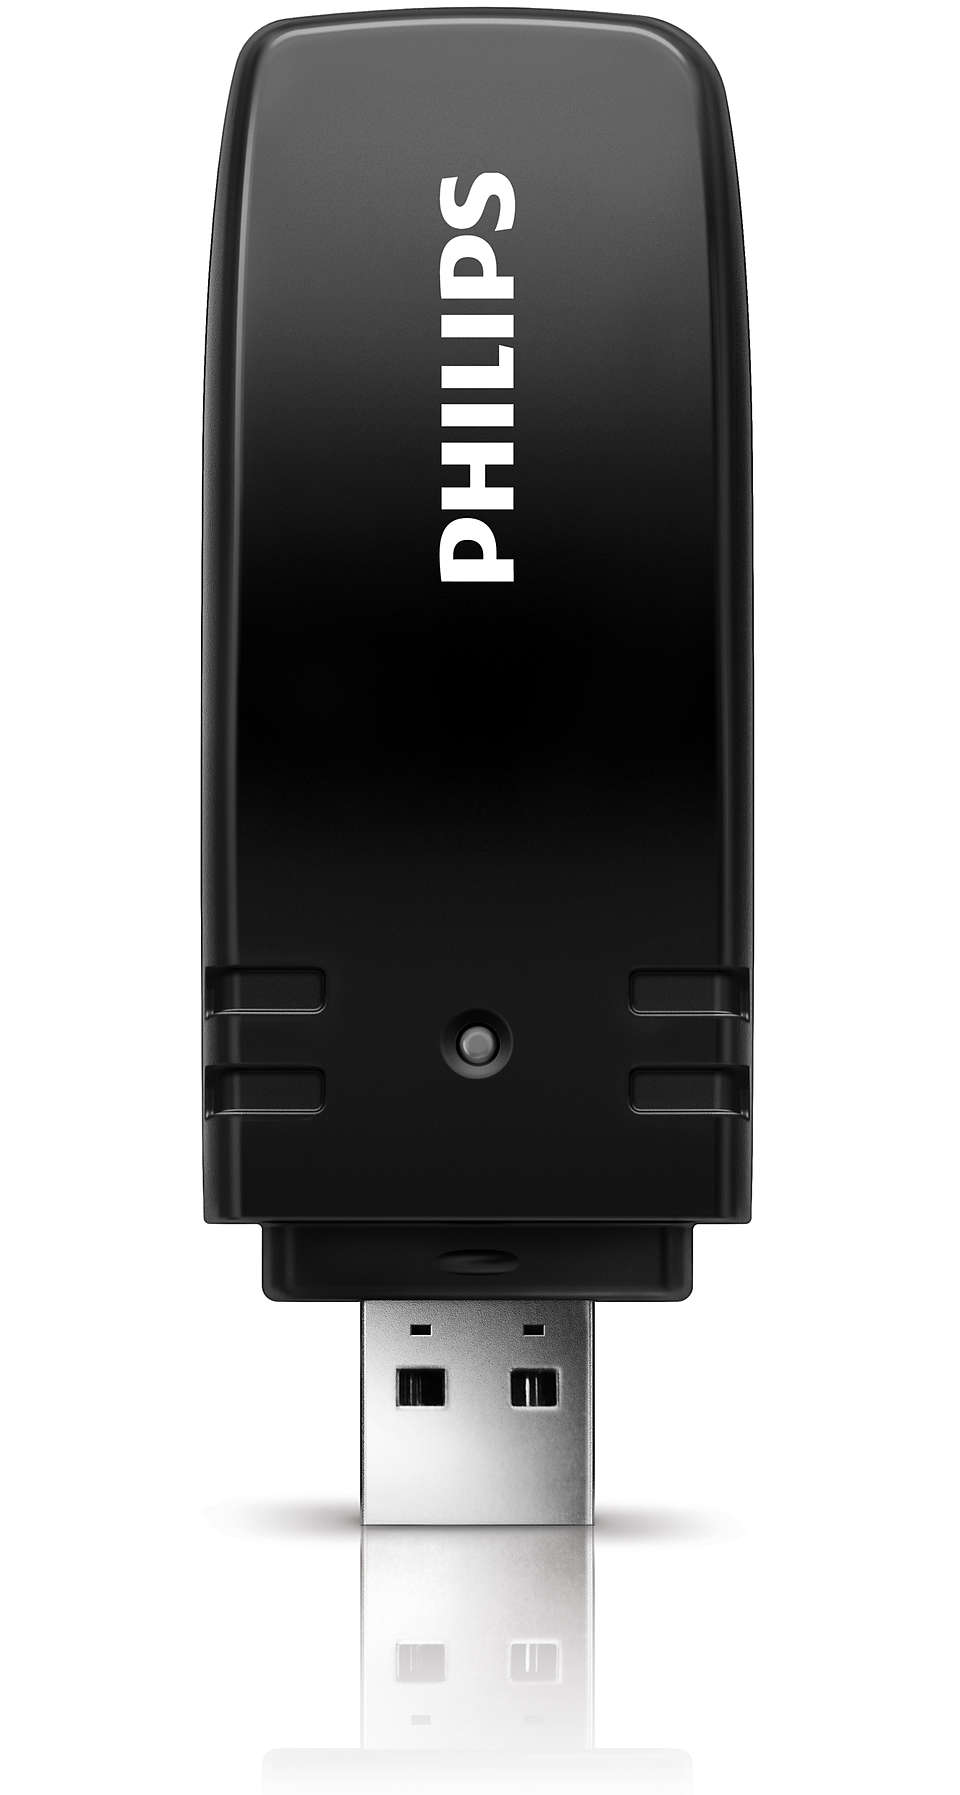 Macadam Slægtsforskning triathlon Wireless USB Adapter WUB1110/00 | Philips